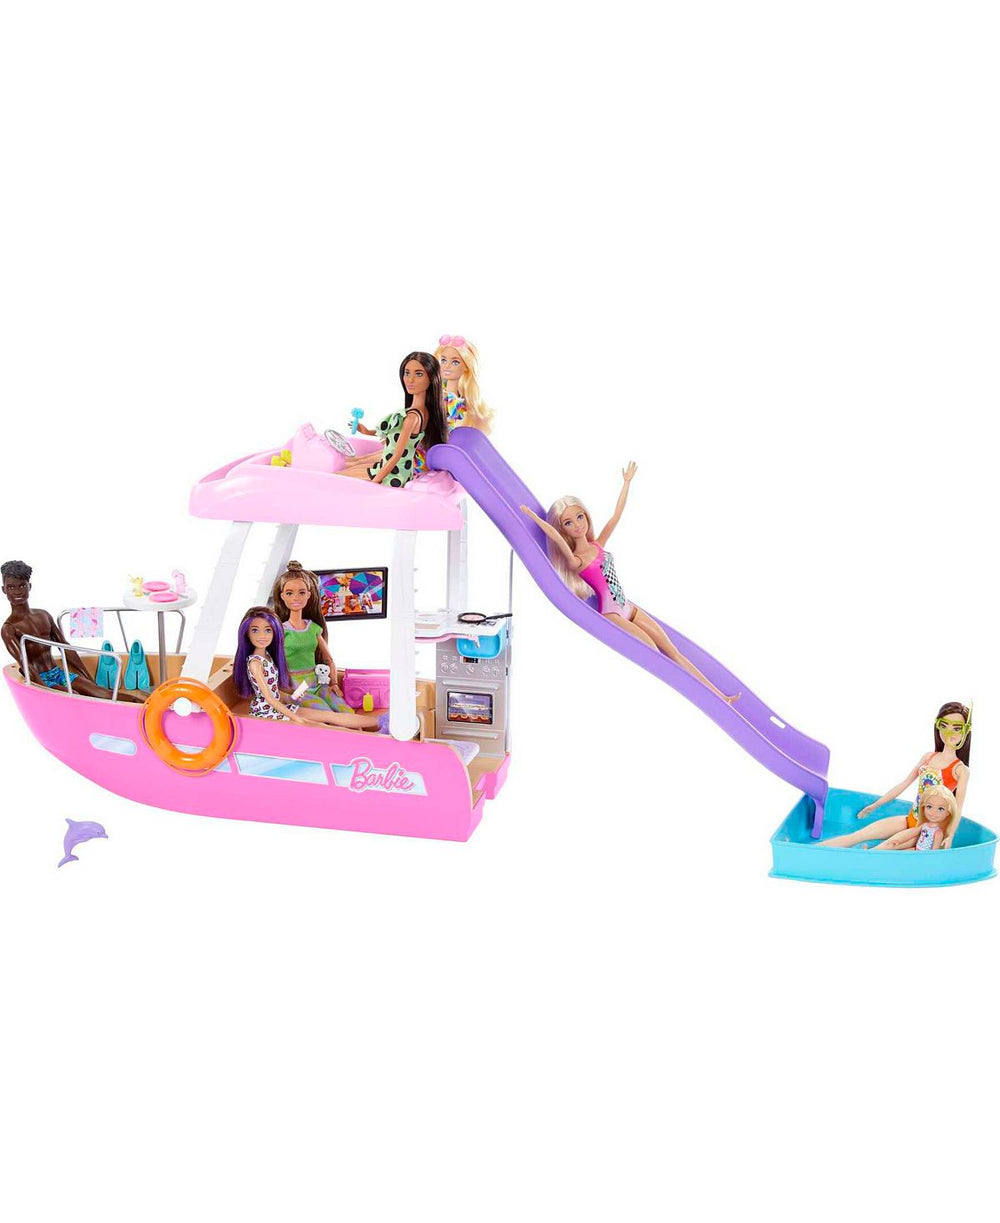 Barbie Dream Boat Playset - Interactive Ocean Adventure Toy